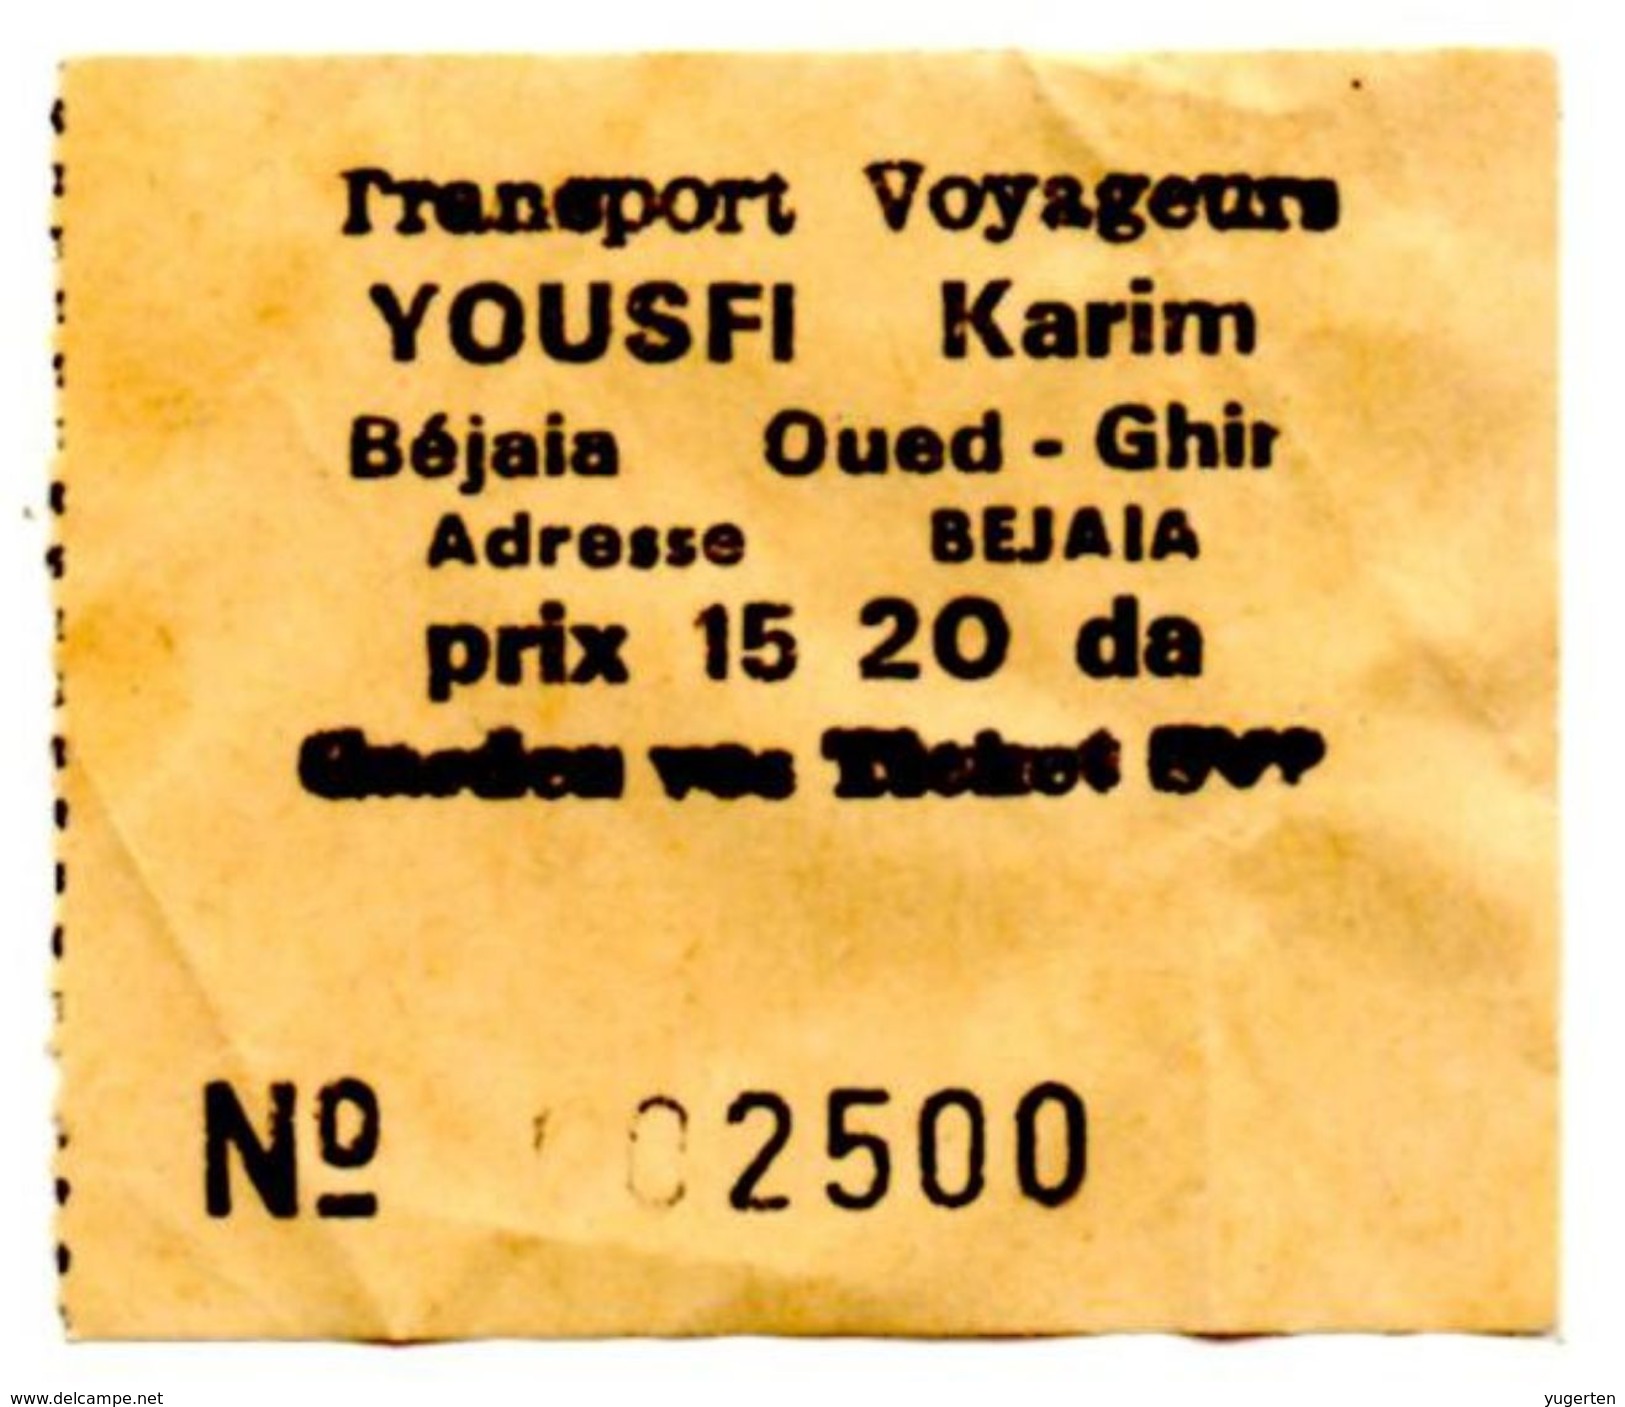 Ticket Transport Algeria Bus YOUSFI KARIM - Bejaia - Wereld